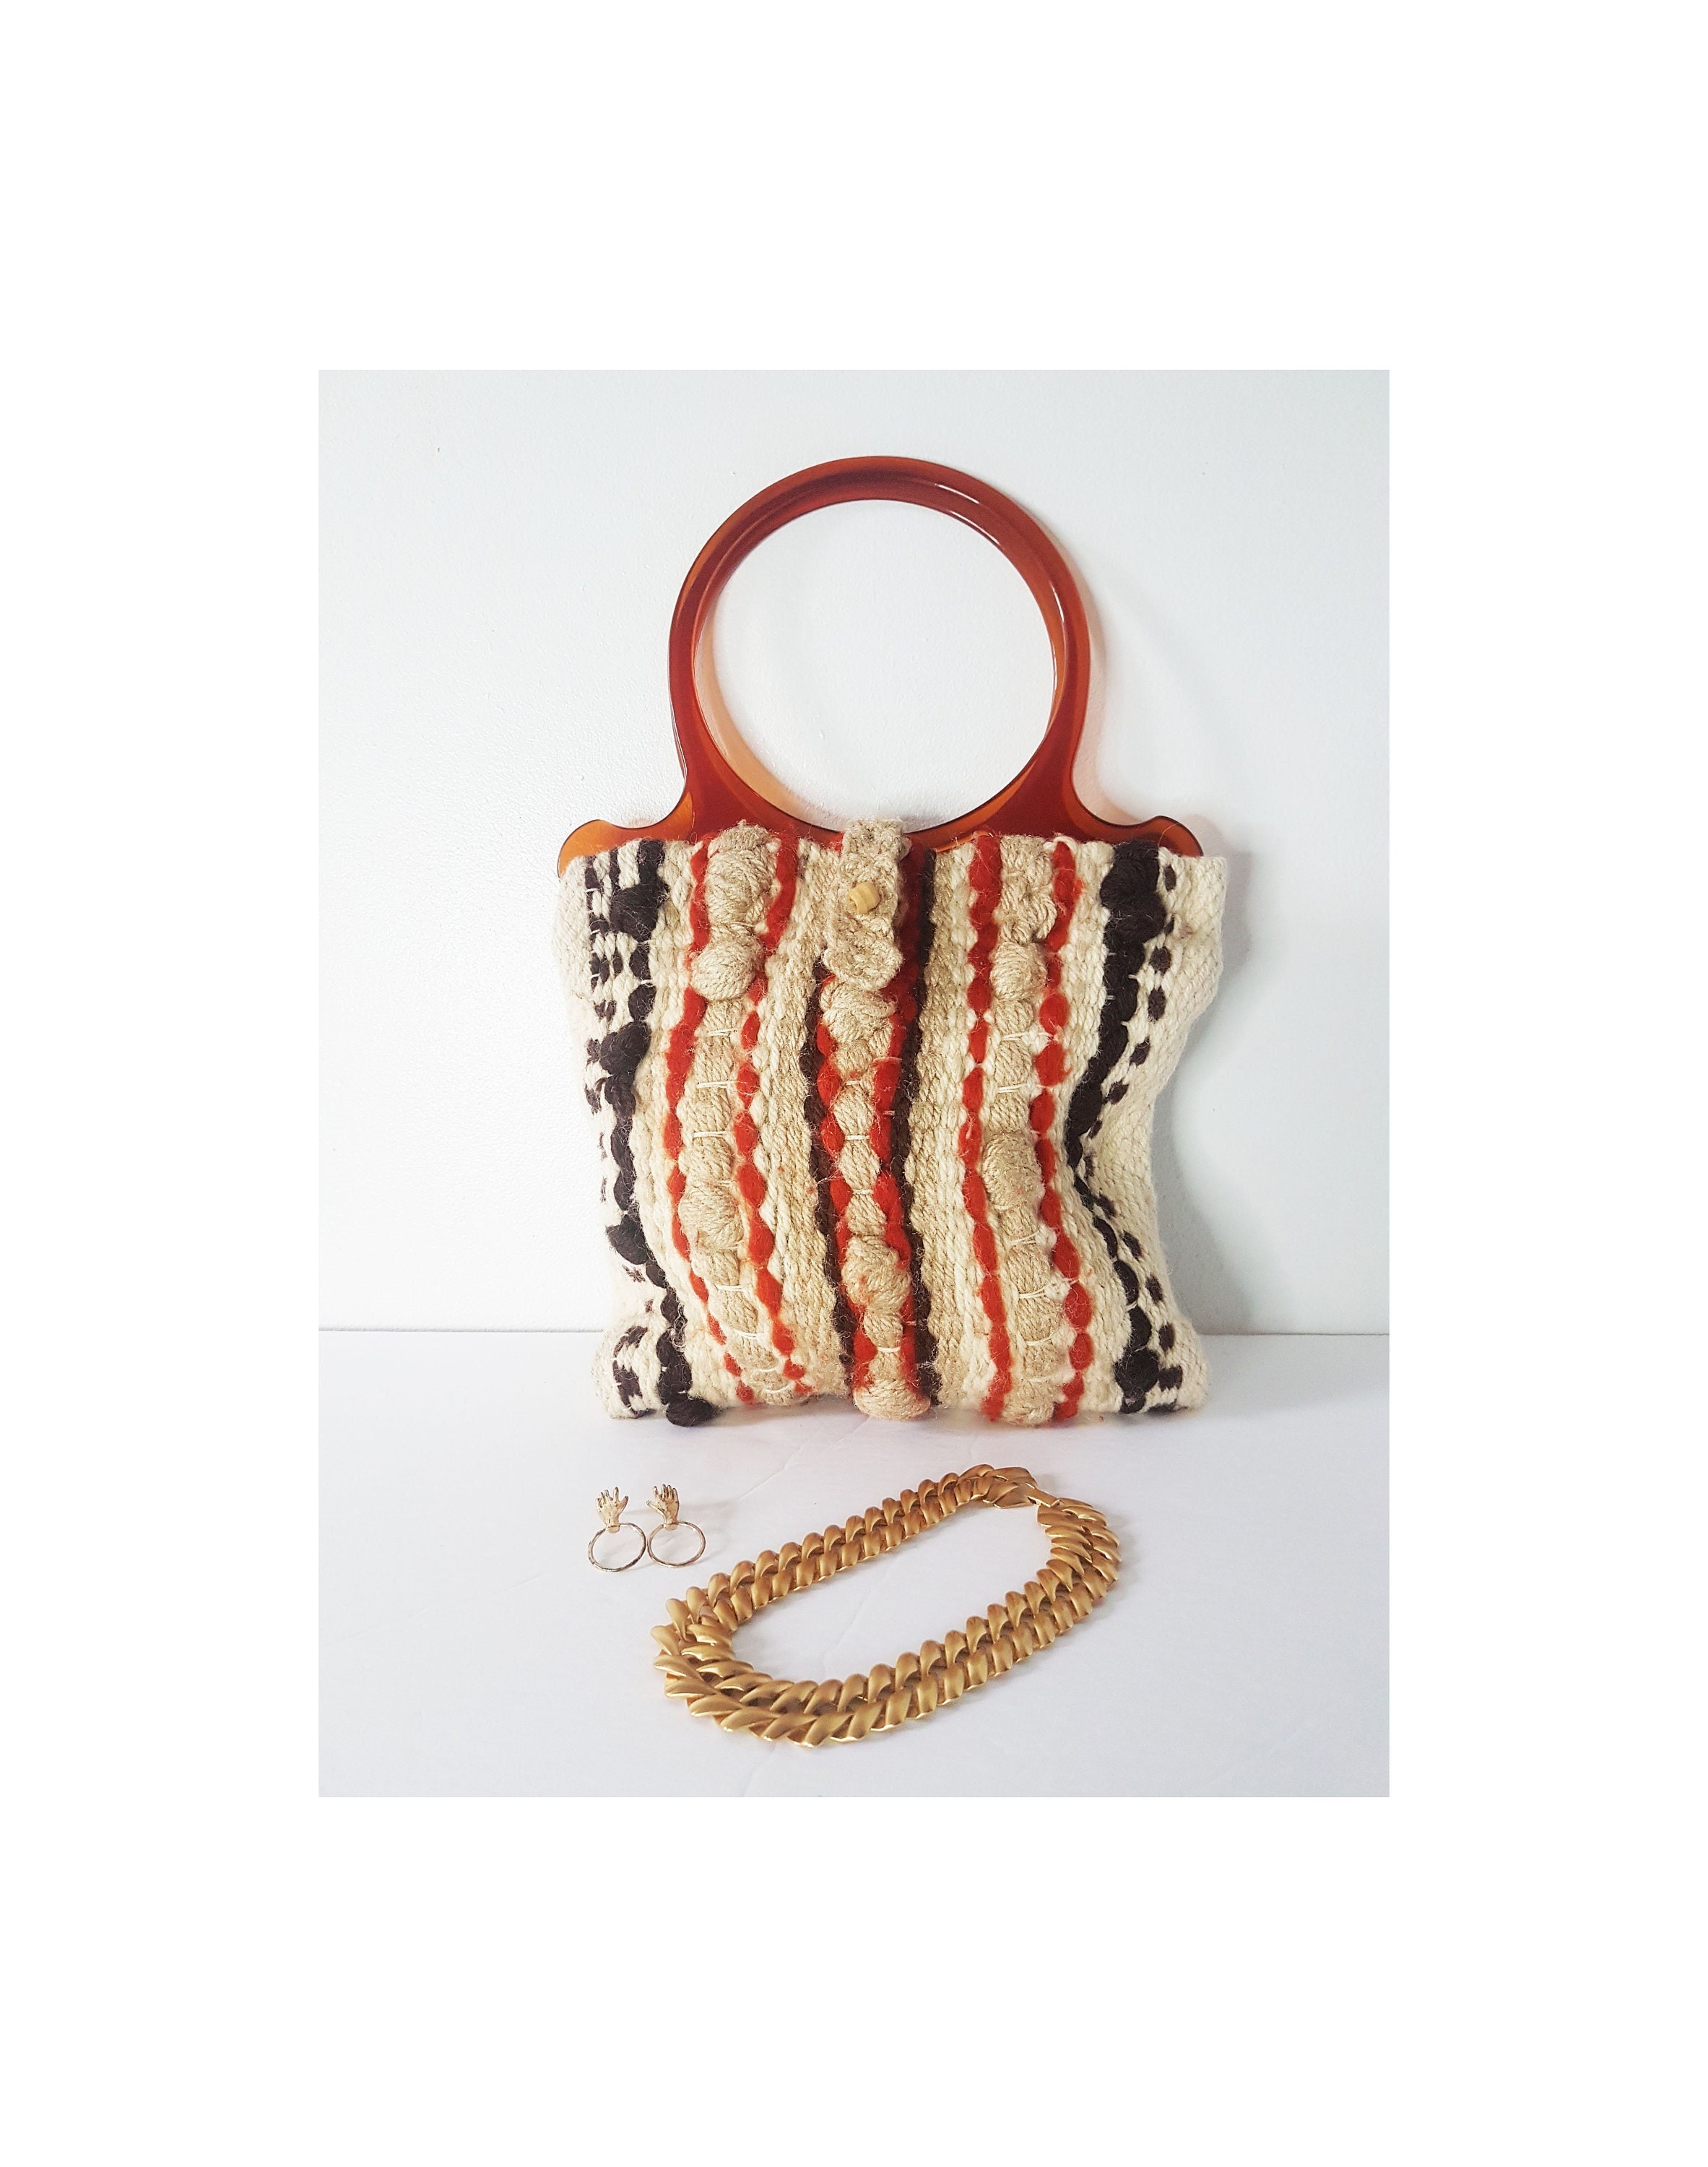 Vintage 70s Knit Bag Purse Unique Handbag Round Handle Knitted